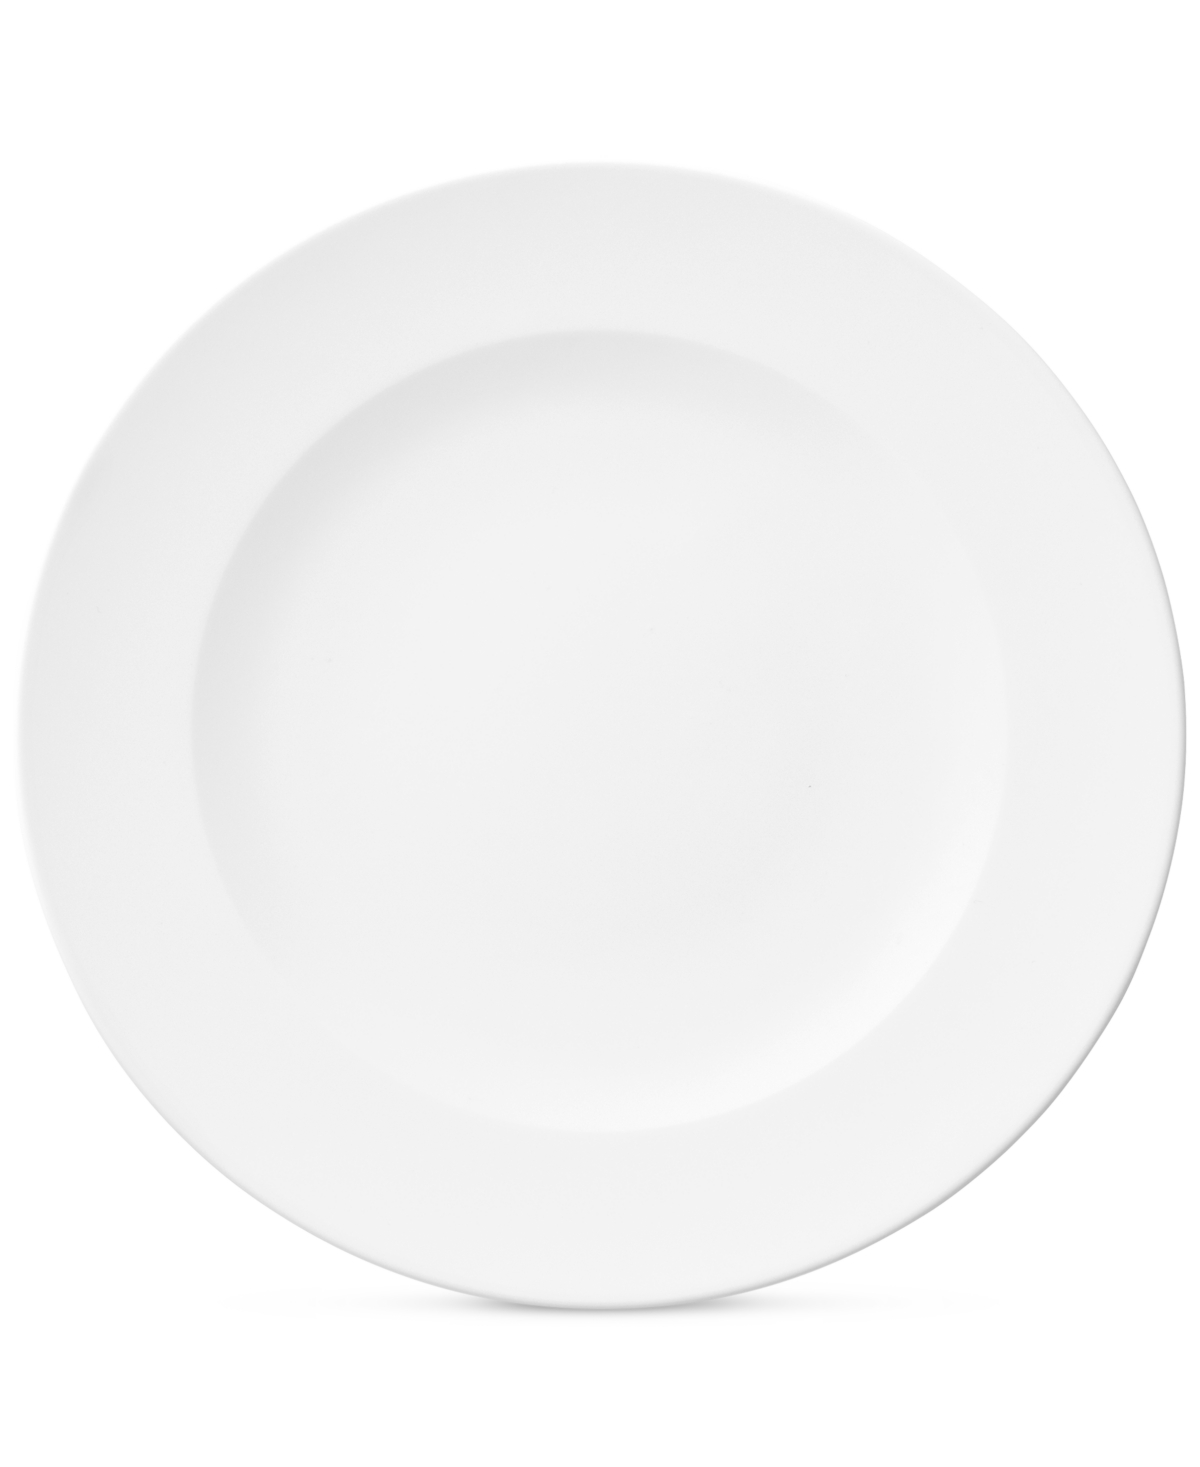 Dinnerware For Me Collection Porcelain Dinner Plate - White